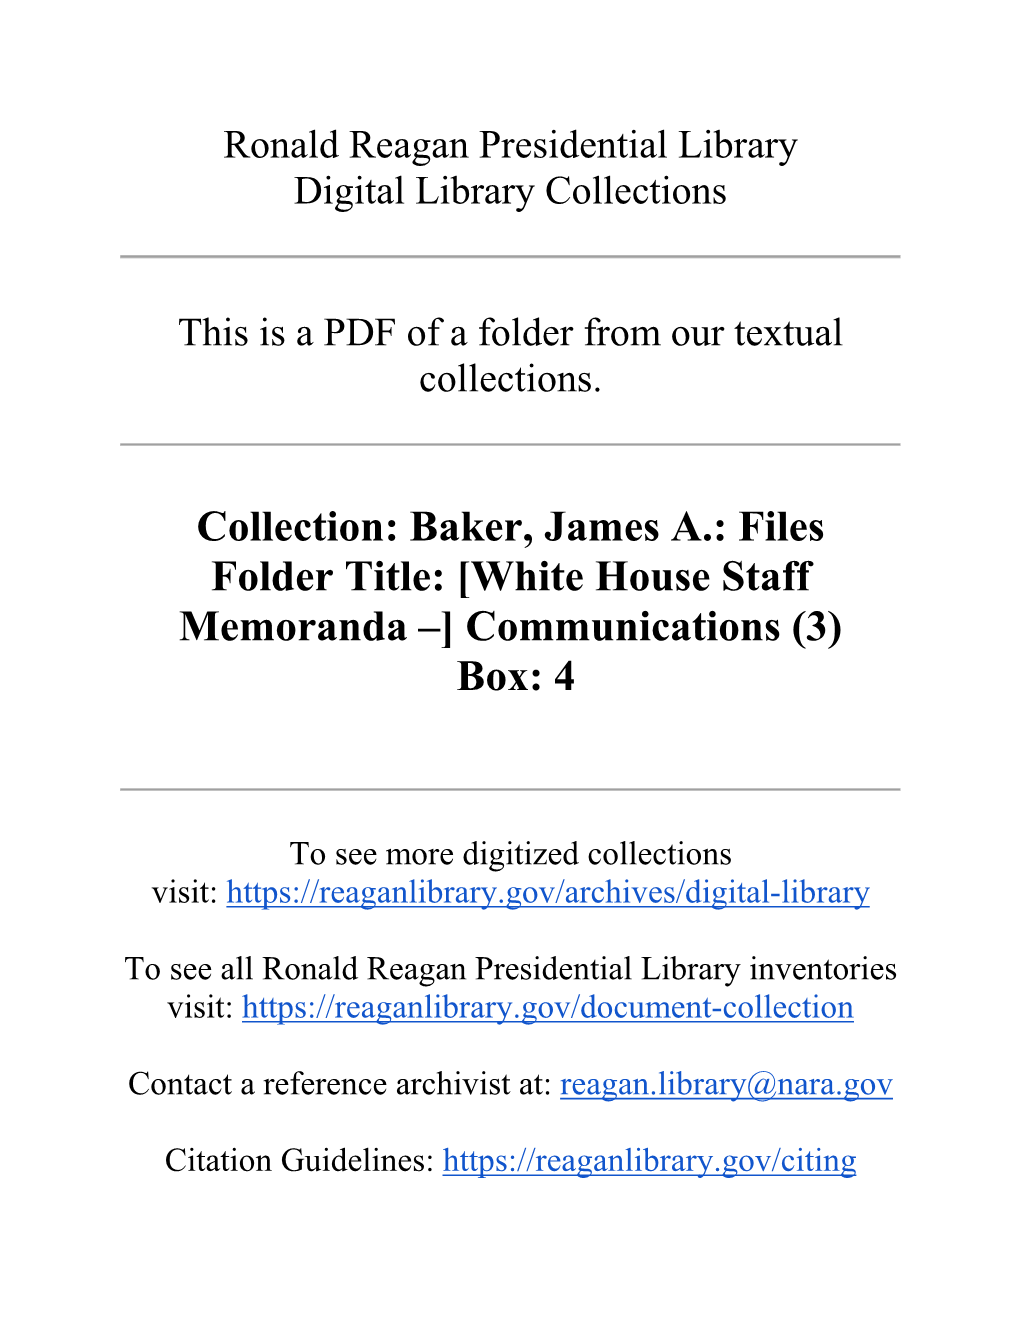 Baker, James A.: Files Folder Title: [White House Staff Memoranda –] Communications (3) Box: 4